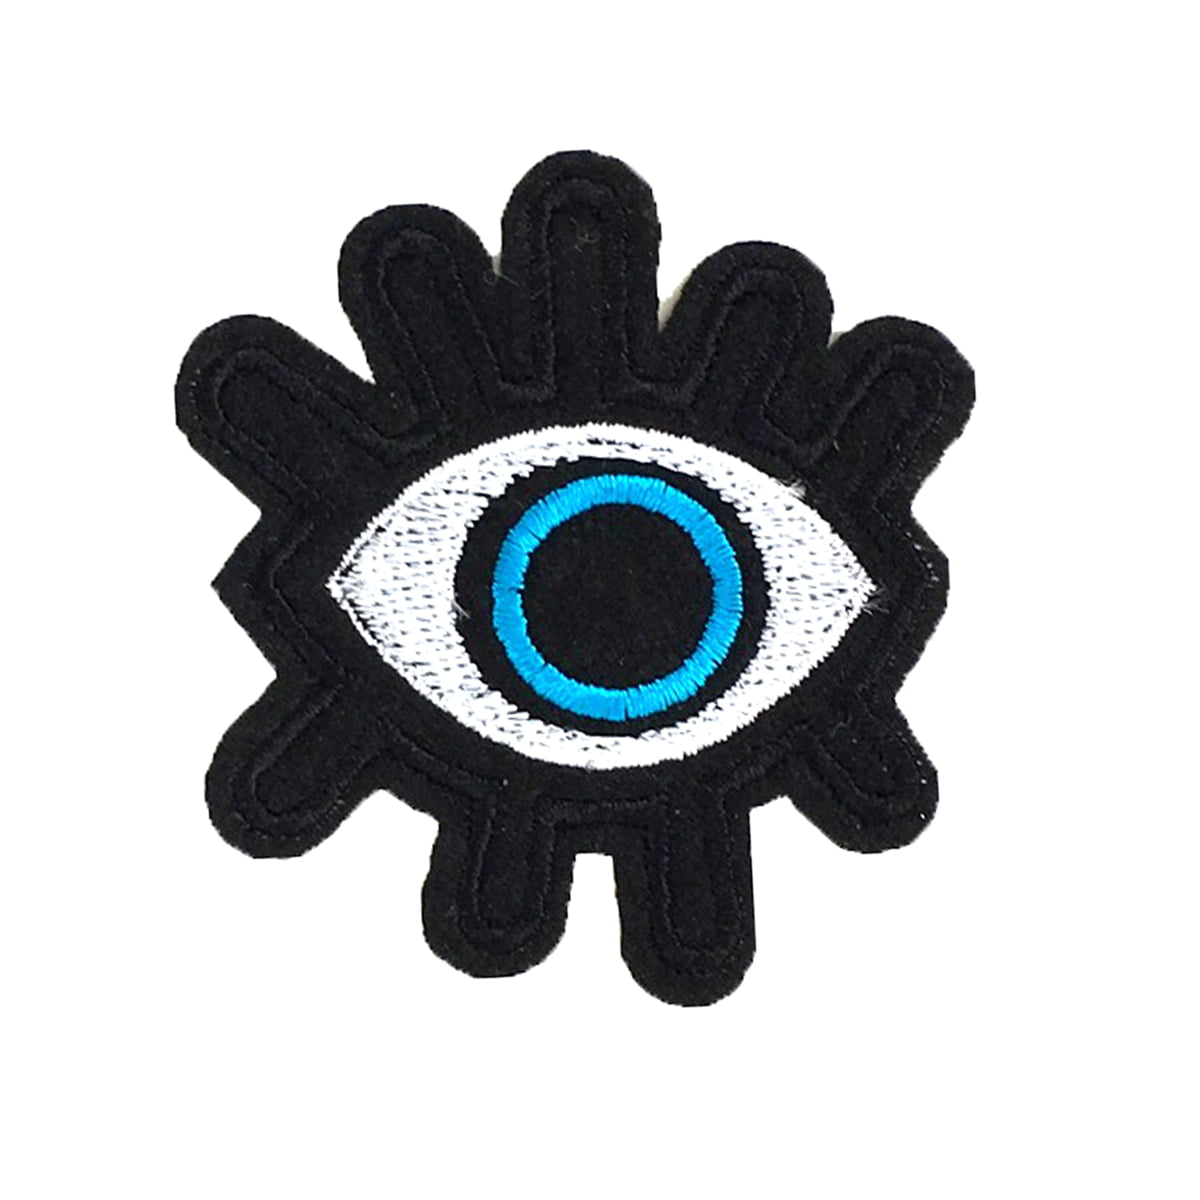 Large Iris Evil Eye Nazar Charm Multi-Color Embroidered Iron-On